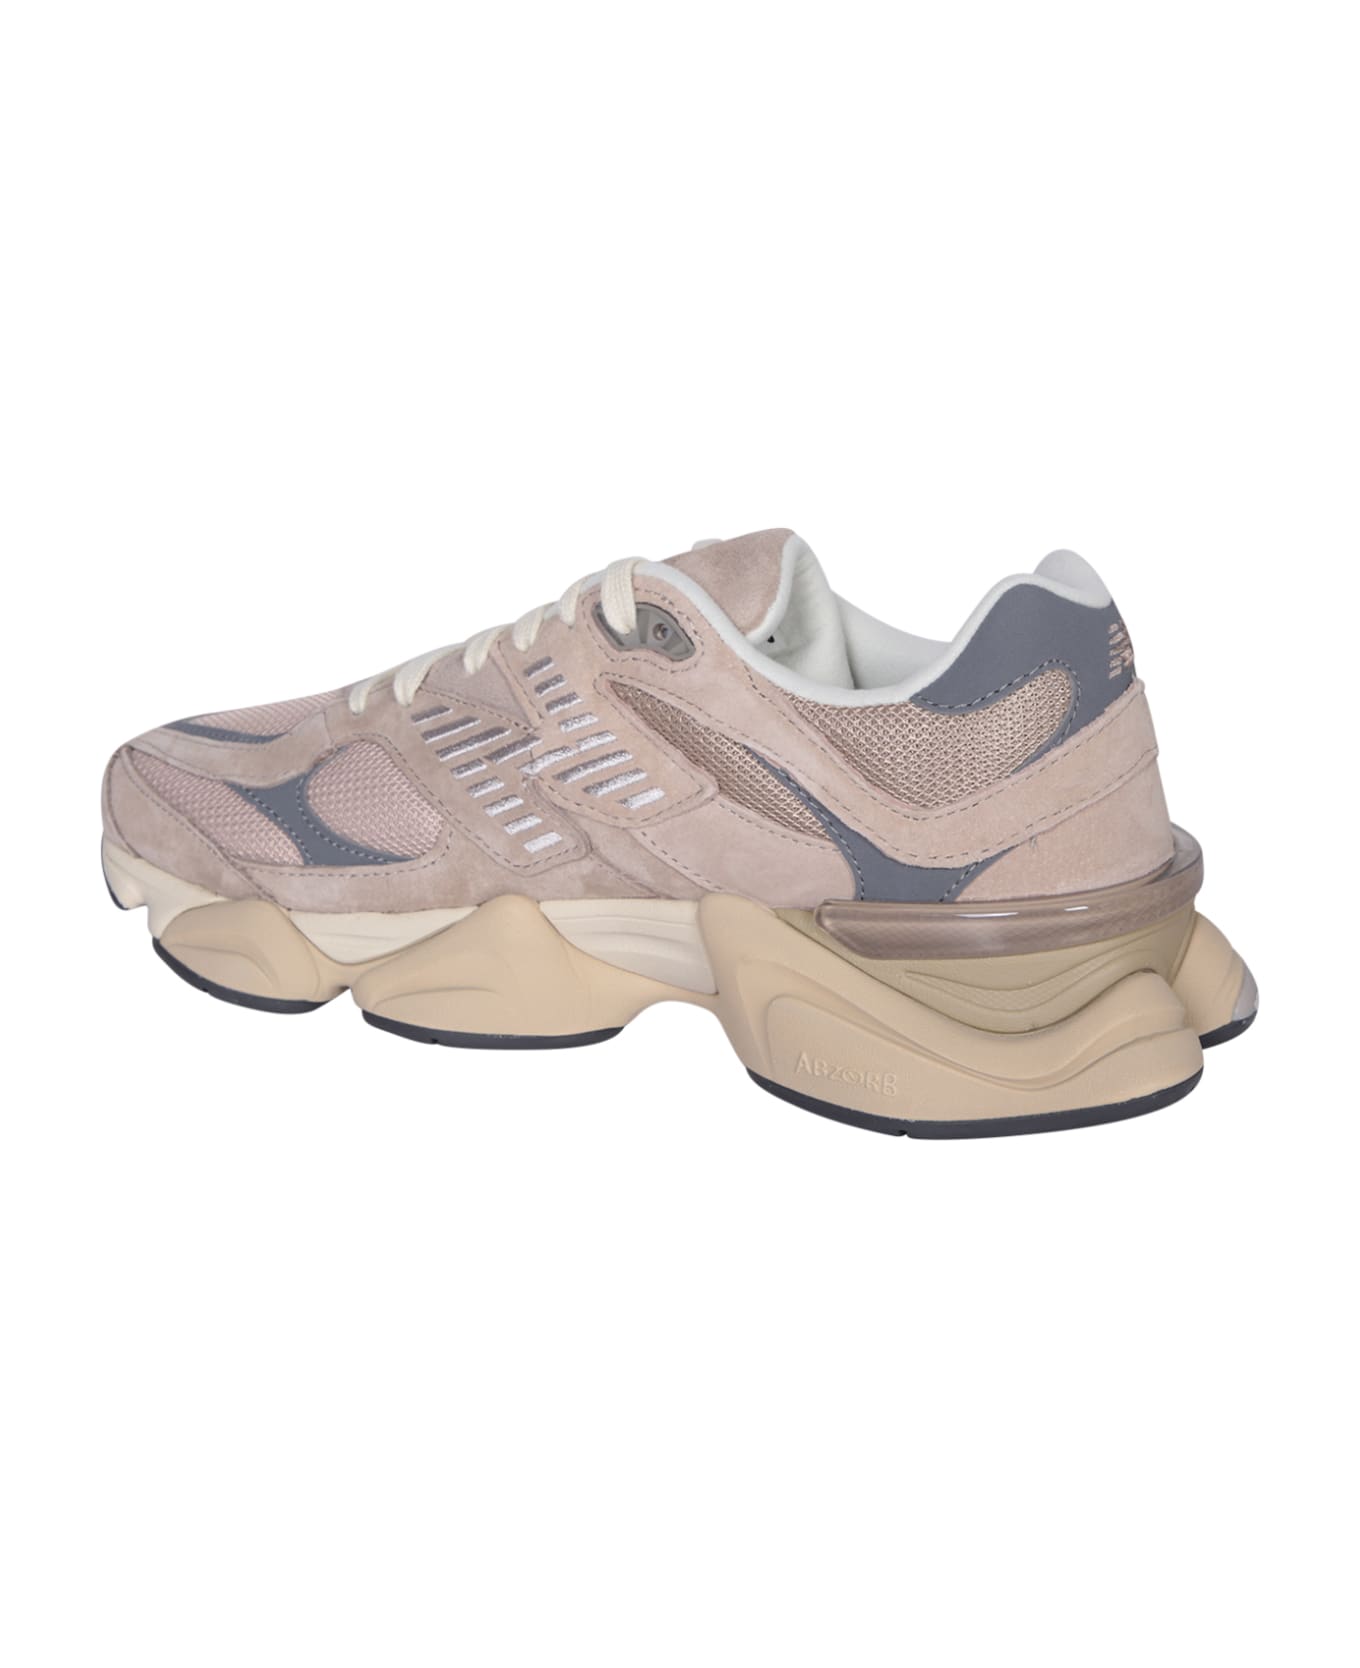 New Balance 9060 Beige/grey Sneakers - White